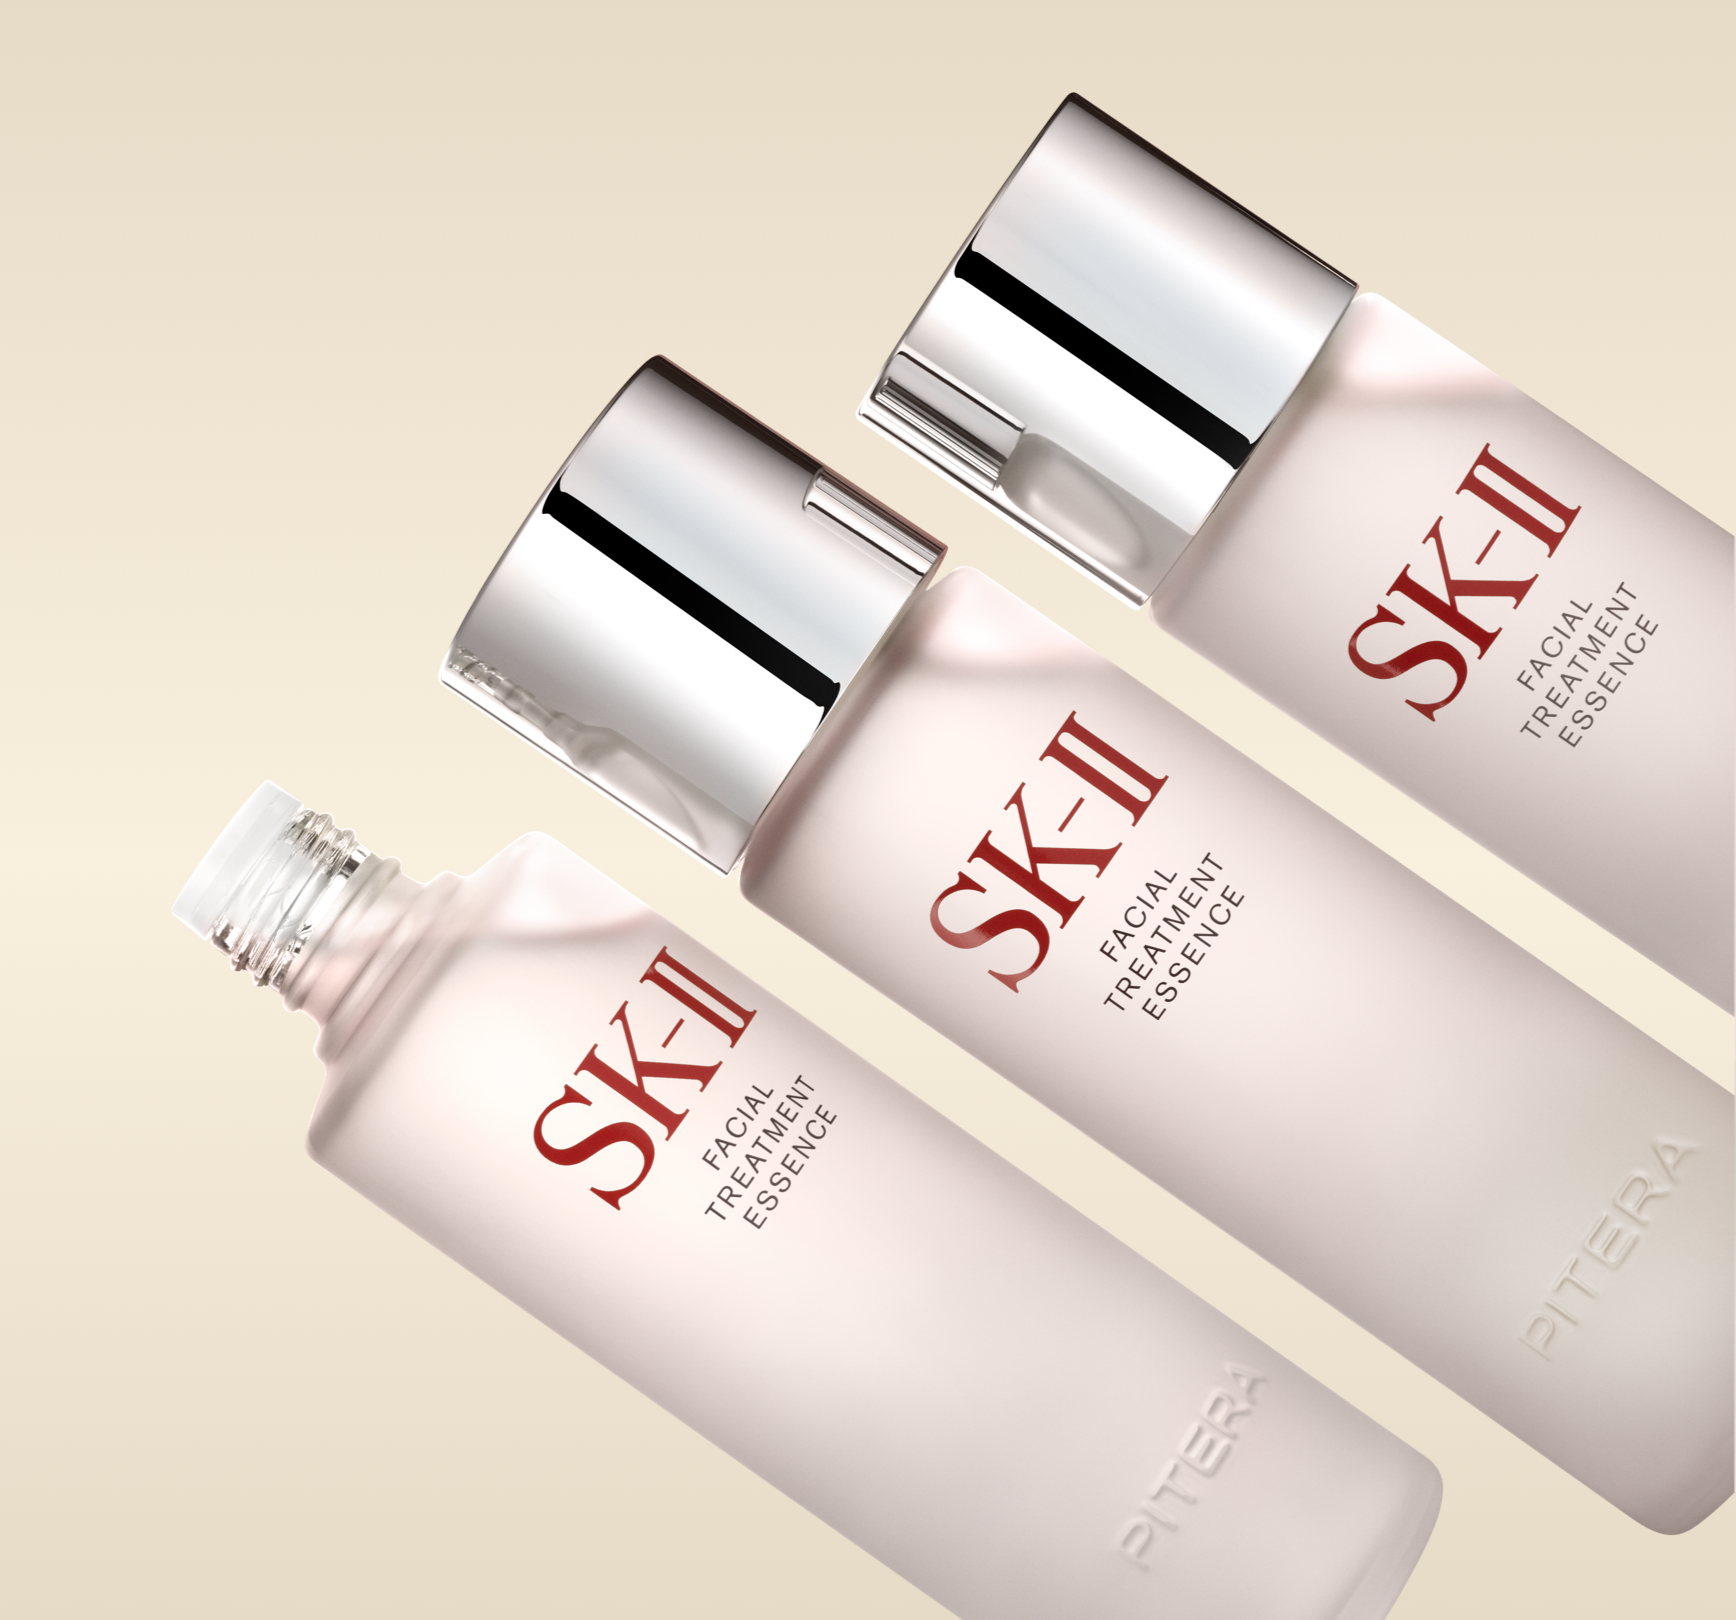 SK-II 中国官网| 汇聚美白护肤产品- 让肌肤更晶莹剔透